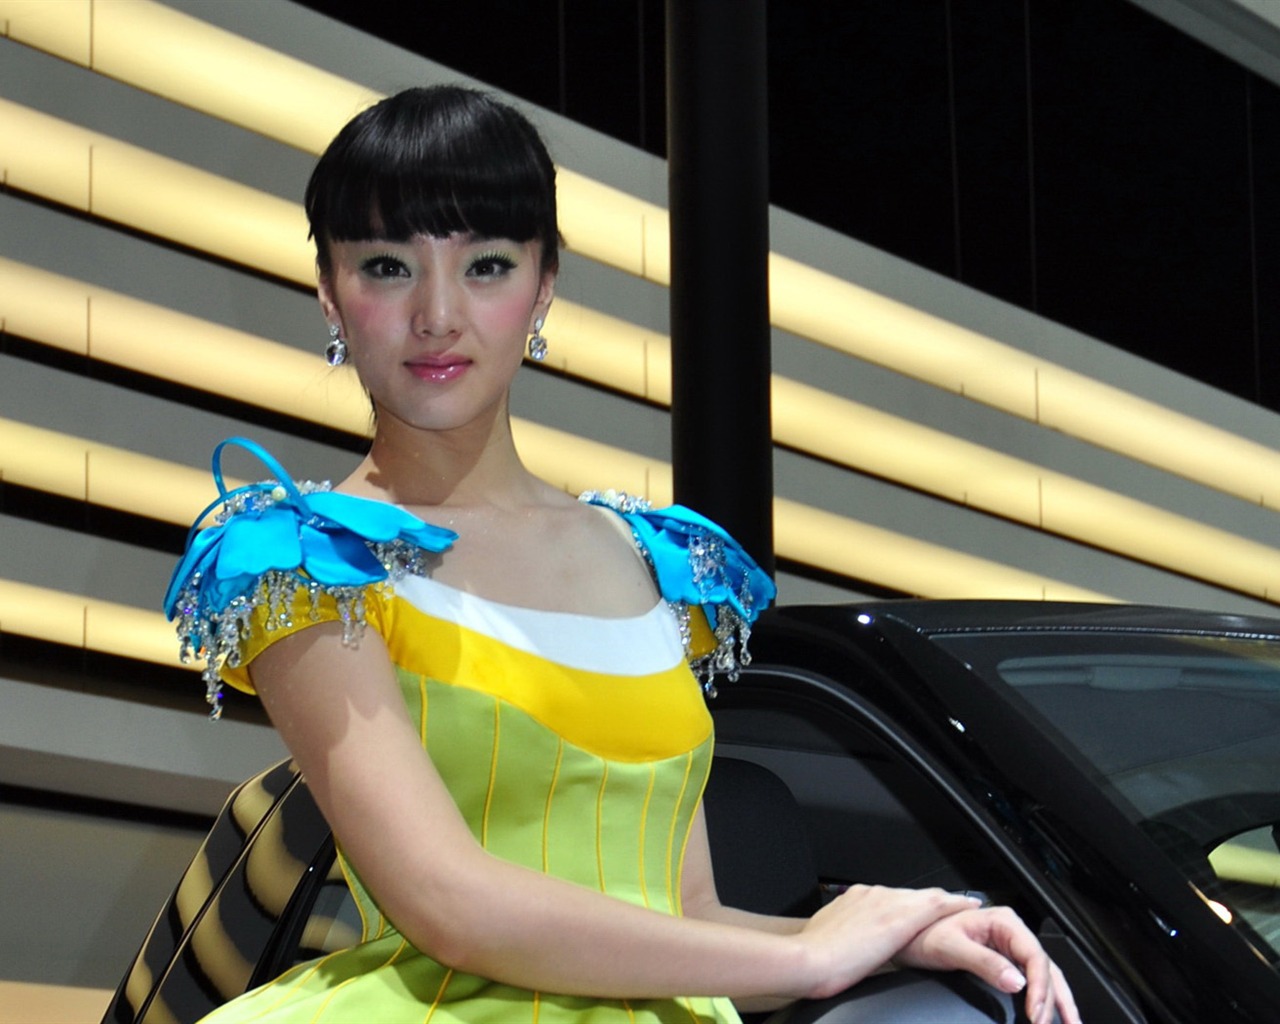 2010 Peking autosalonu modely aut odběrem (2) #3 - 1280x1024